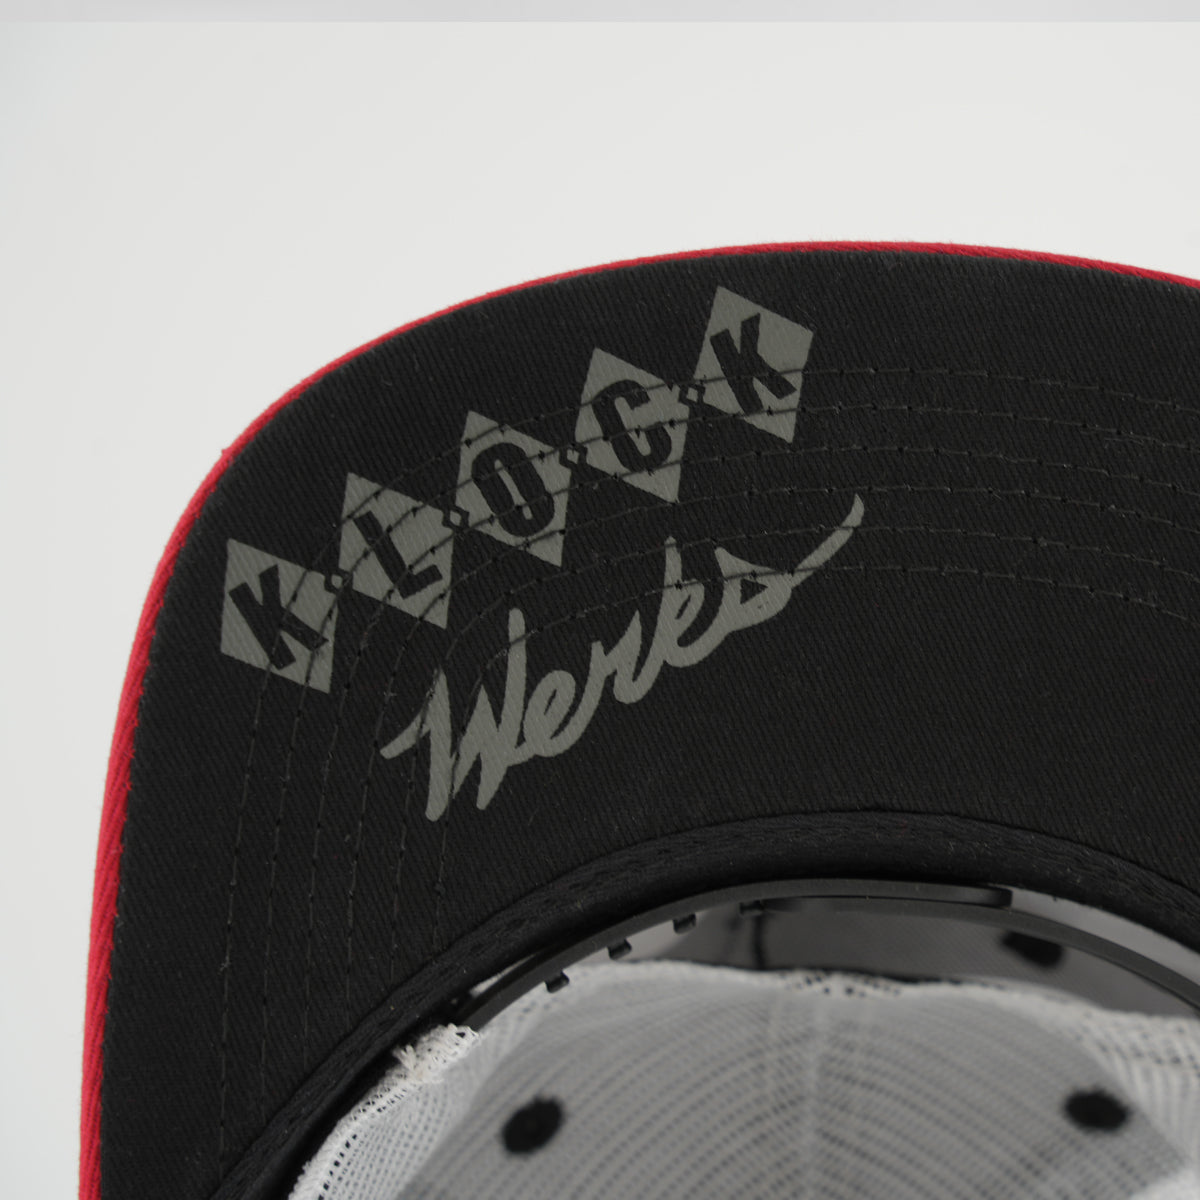 Klock Werks Fist Bump Stripe Trucker Hat for Youth with Klock Werks imprinted on the brim(Klock Werks imprinted on the brim)